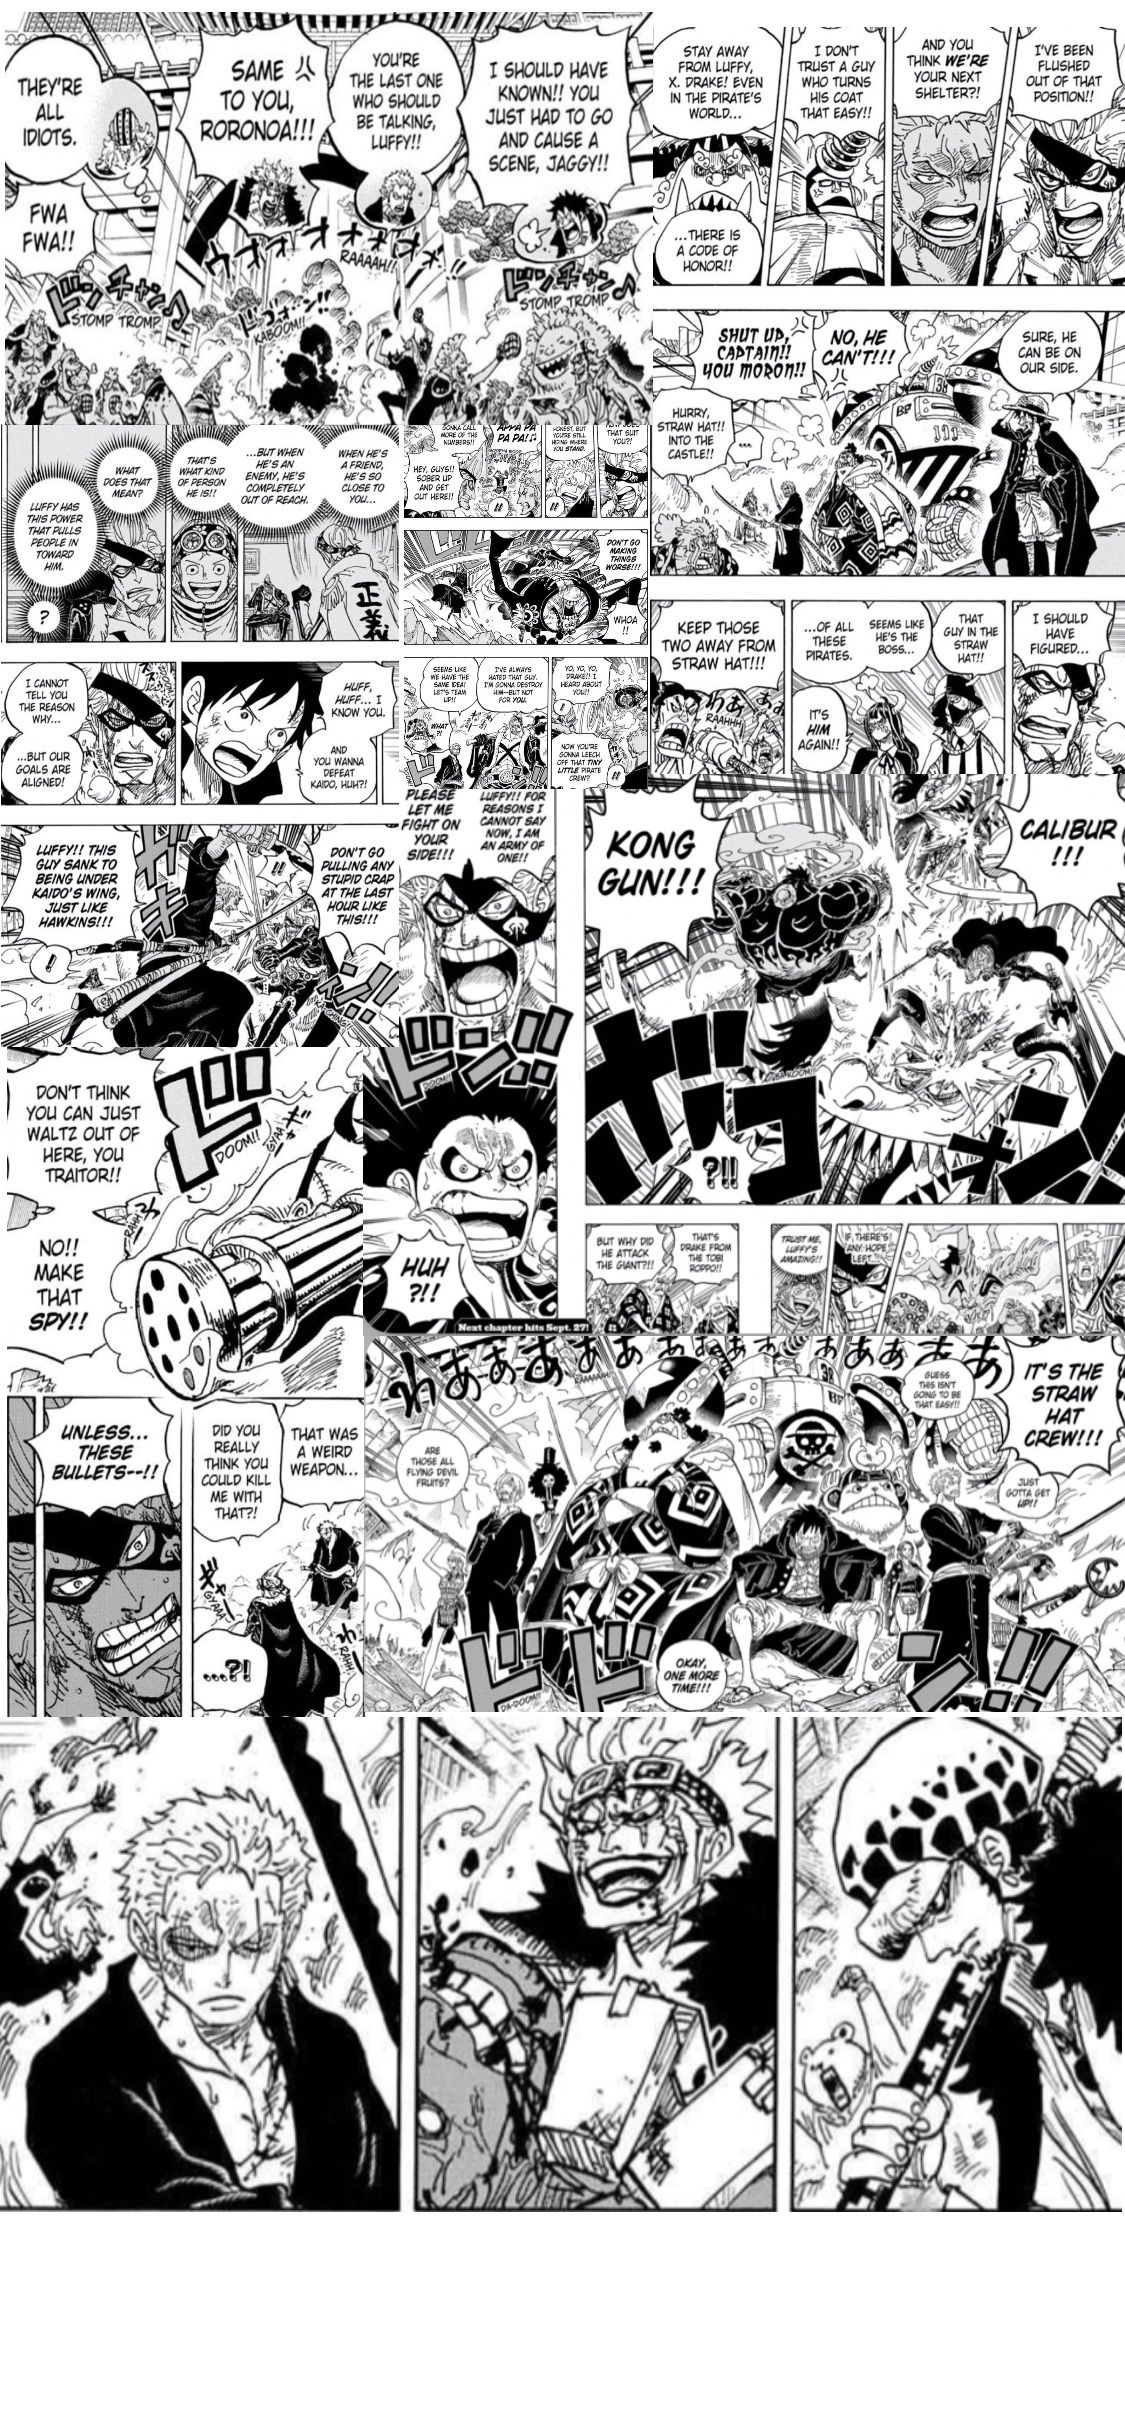 ImageAce manga wallpaper 4 HD à telecharger gratuitement sur fond-ecran-anime.fr en HD 2436 x 1125